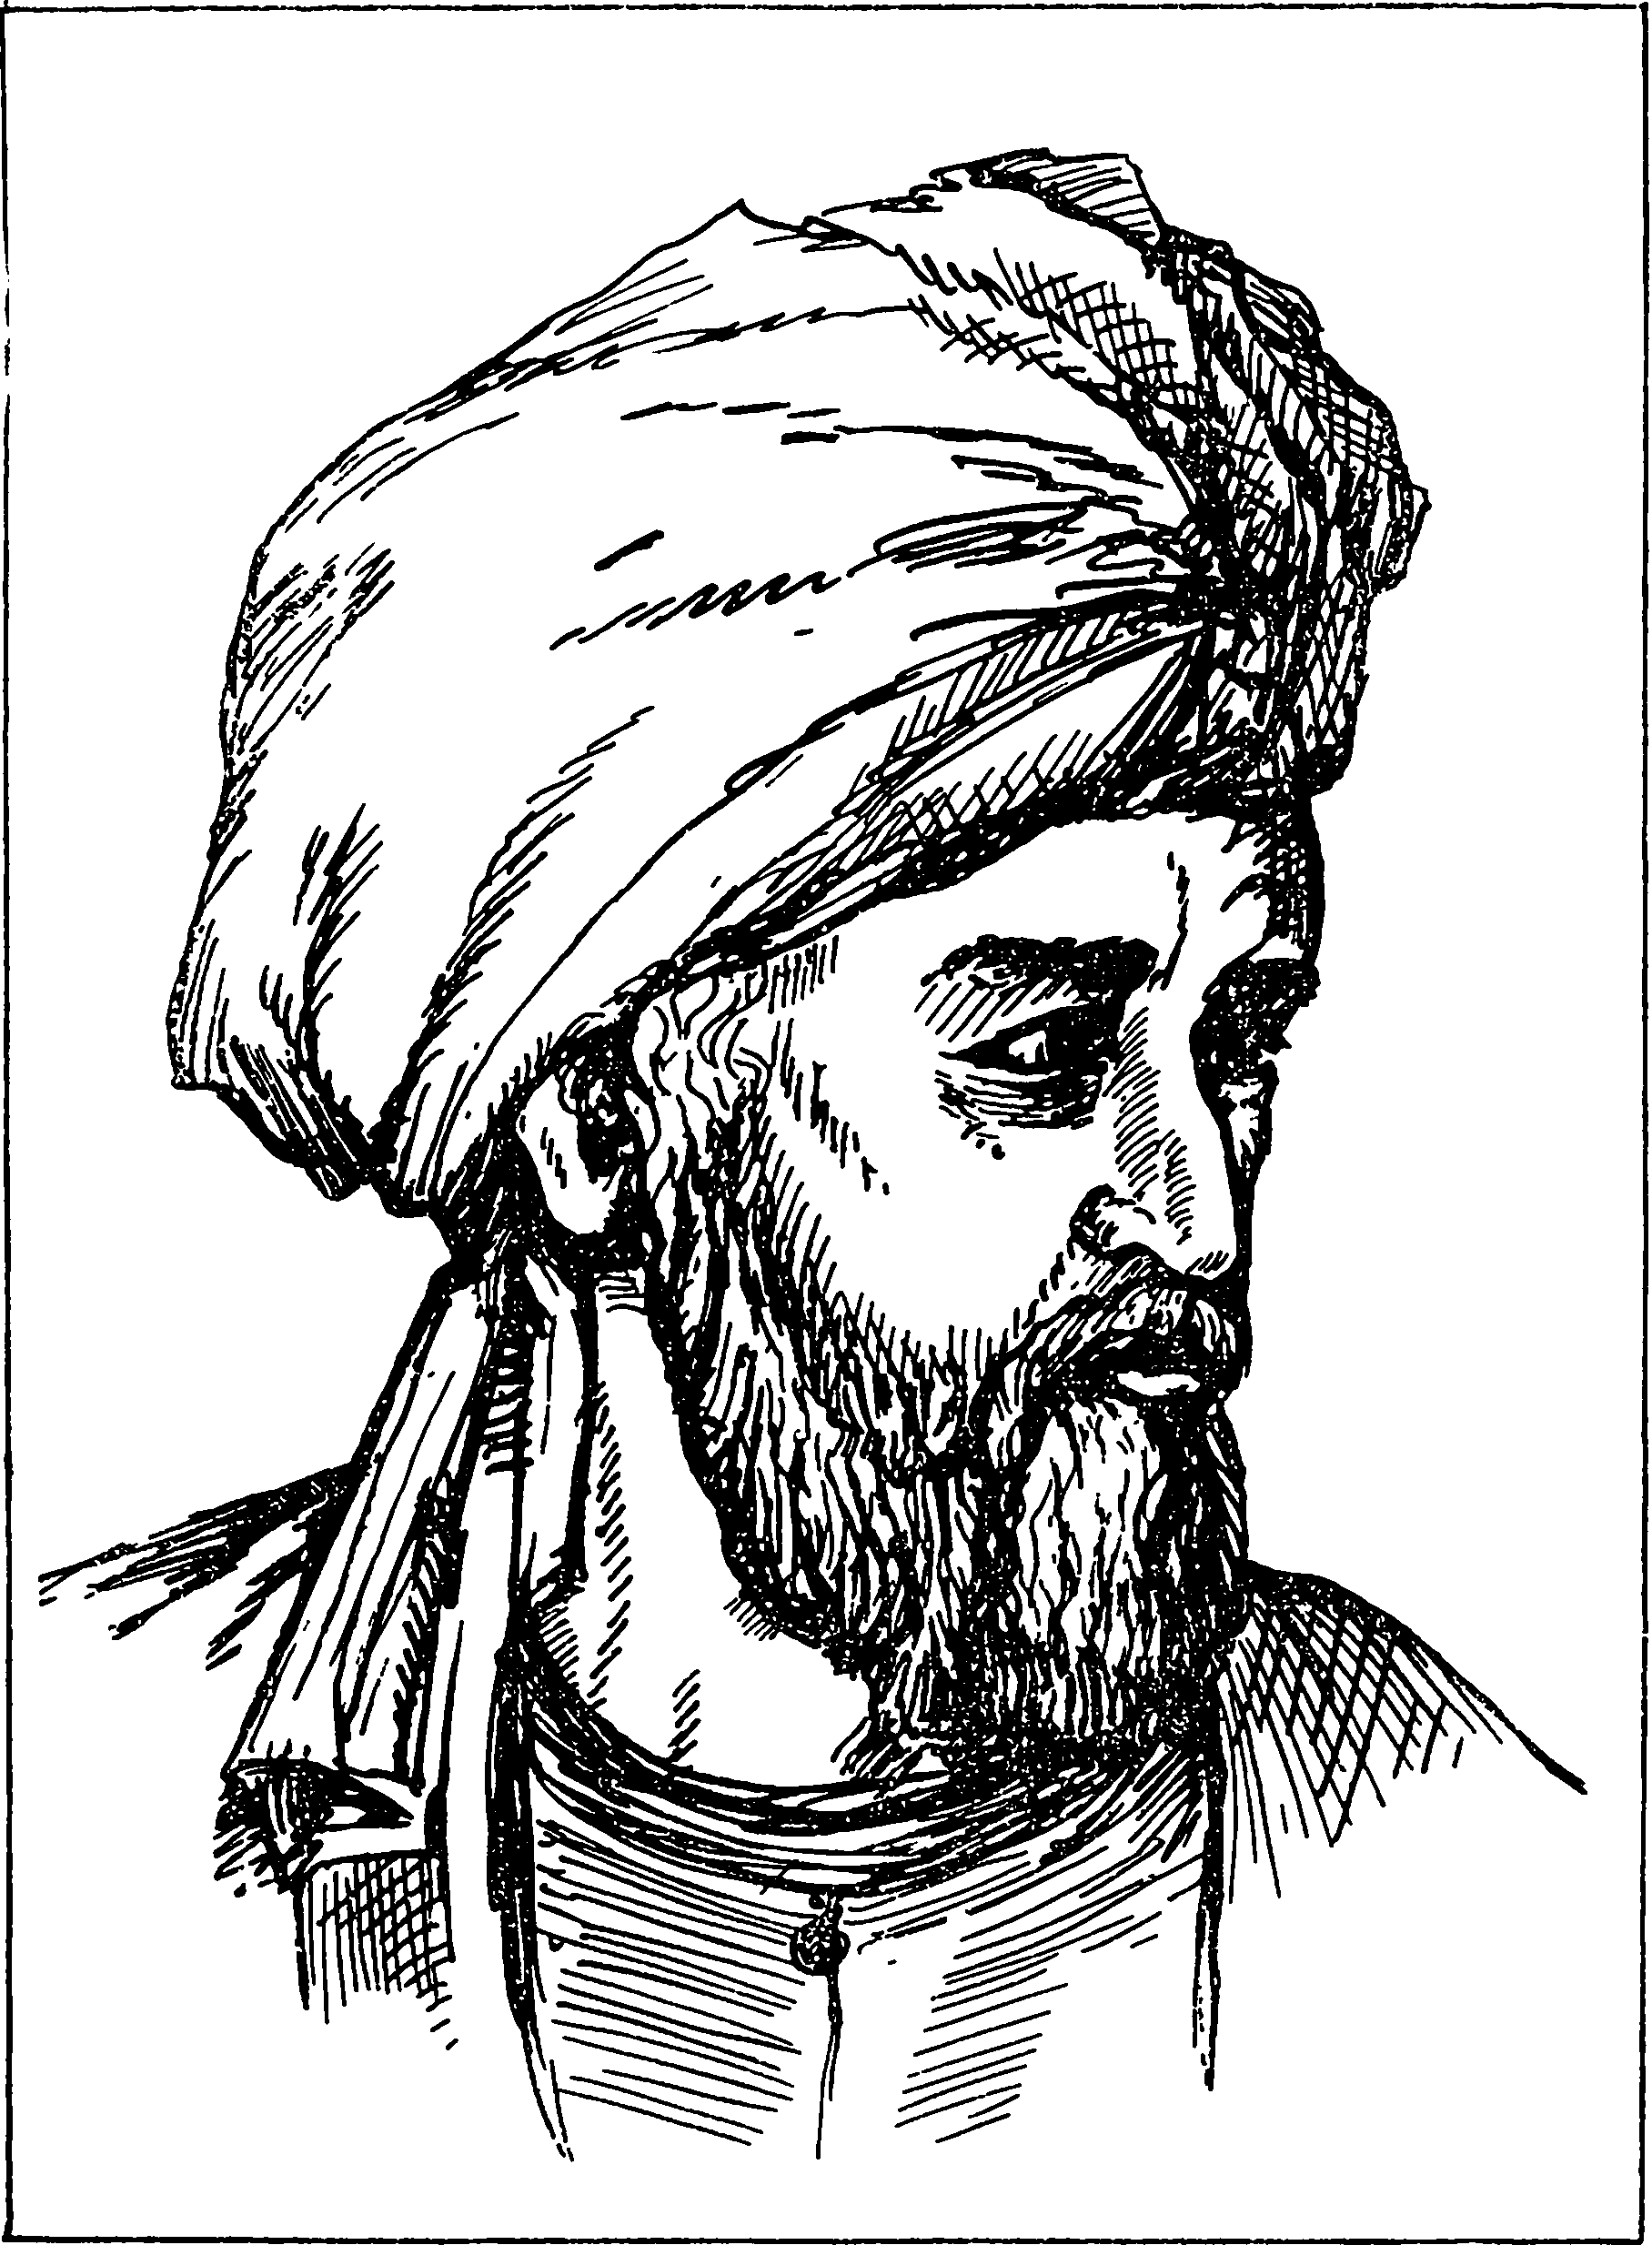 Ибн аль джаррах. Абу Рейхан Аль-Бируни (973–1048). Абу Наср ибн Ирак. Абу Райхан беруни (973 – 1048).